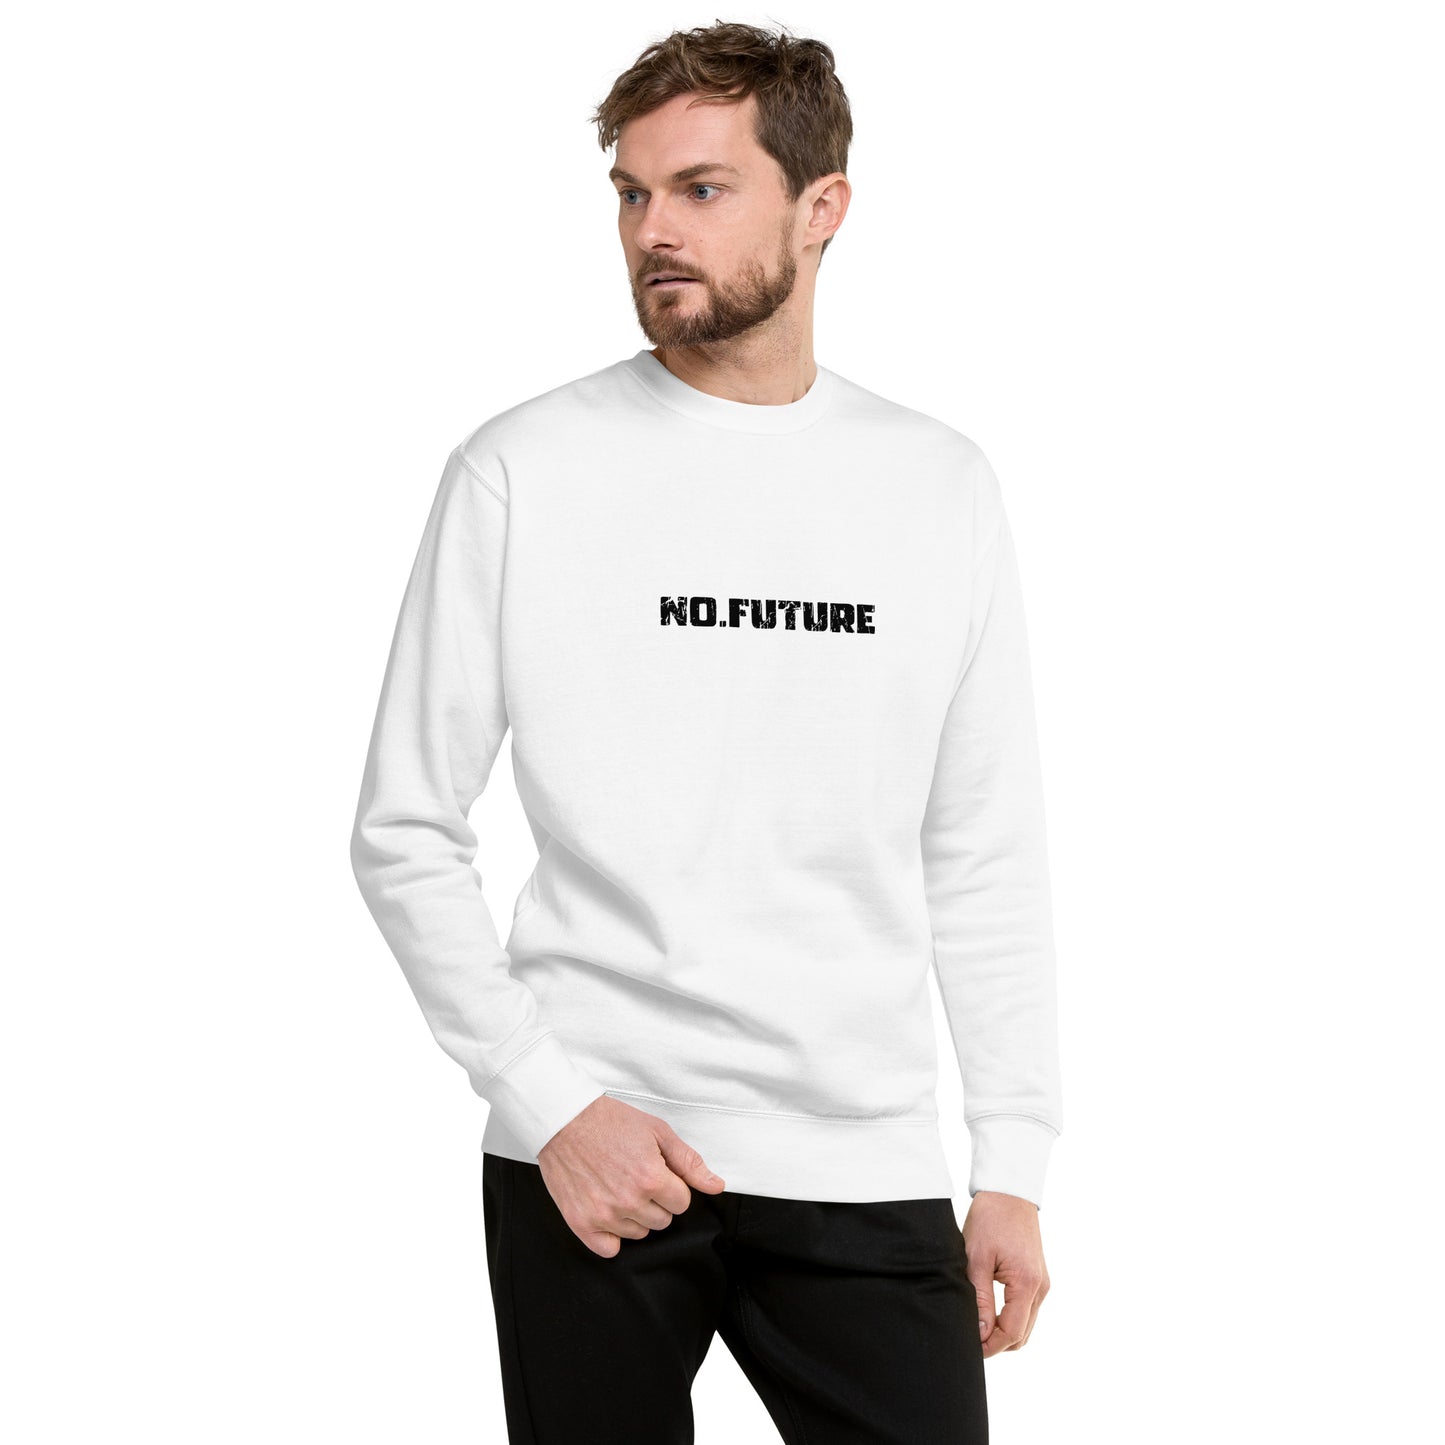 NO.FUTURE Sweater (Unisex)